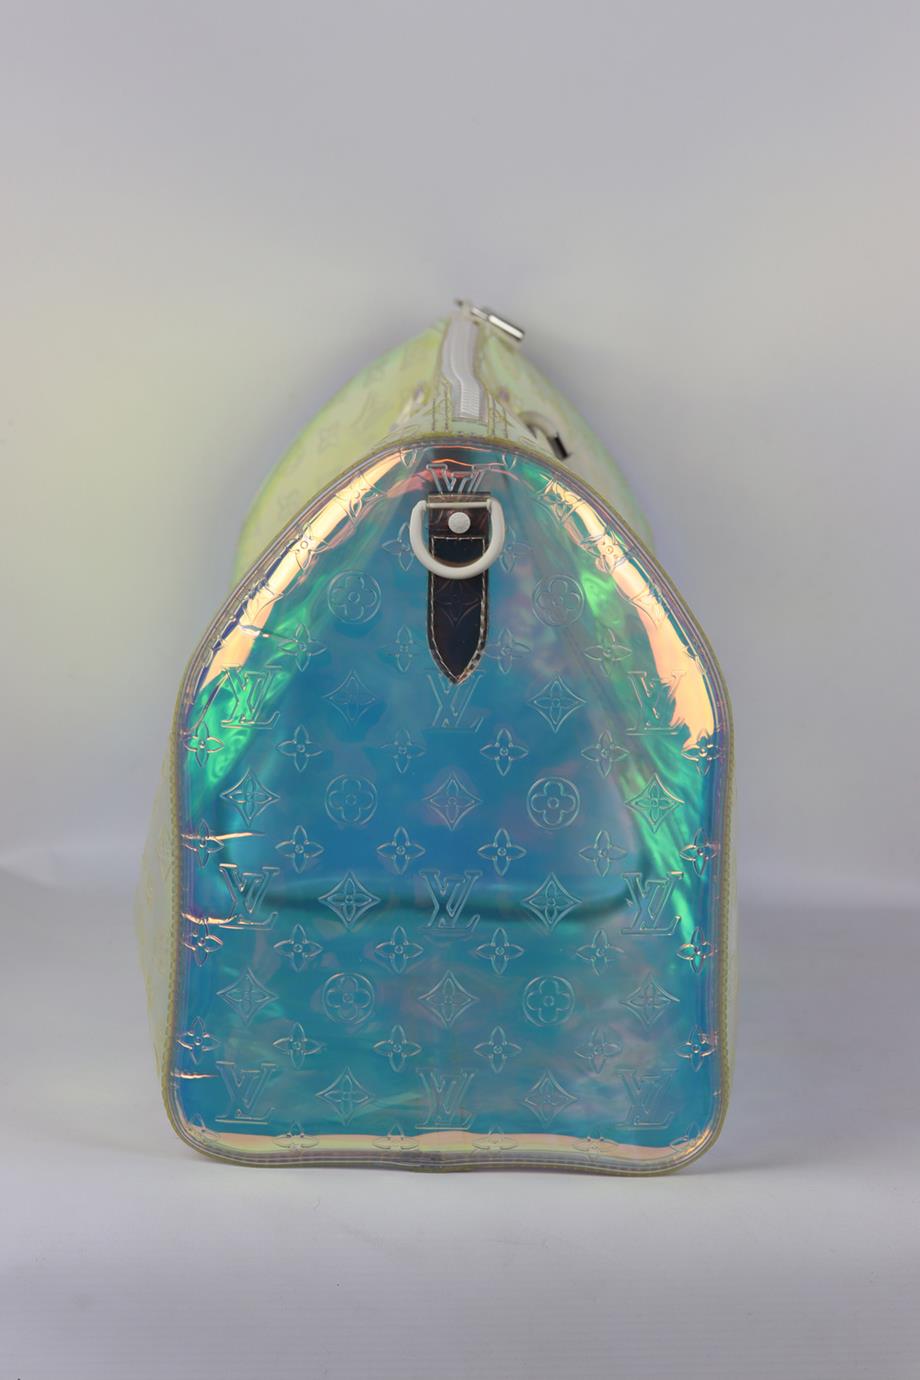 Louis Vuitton Prism Bandouliere Keepall 50 by Virgil Abloh - Iridescent bag  - Handbagholic